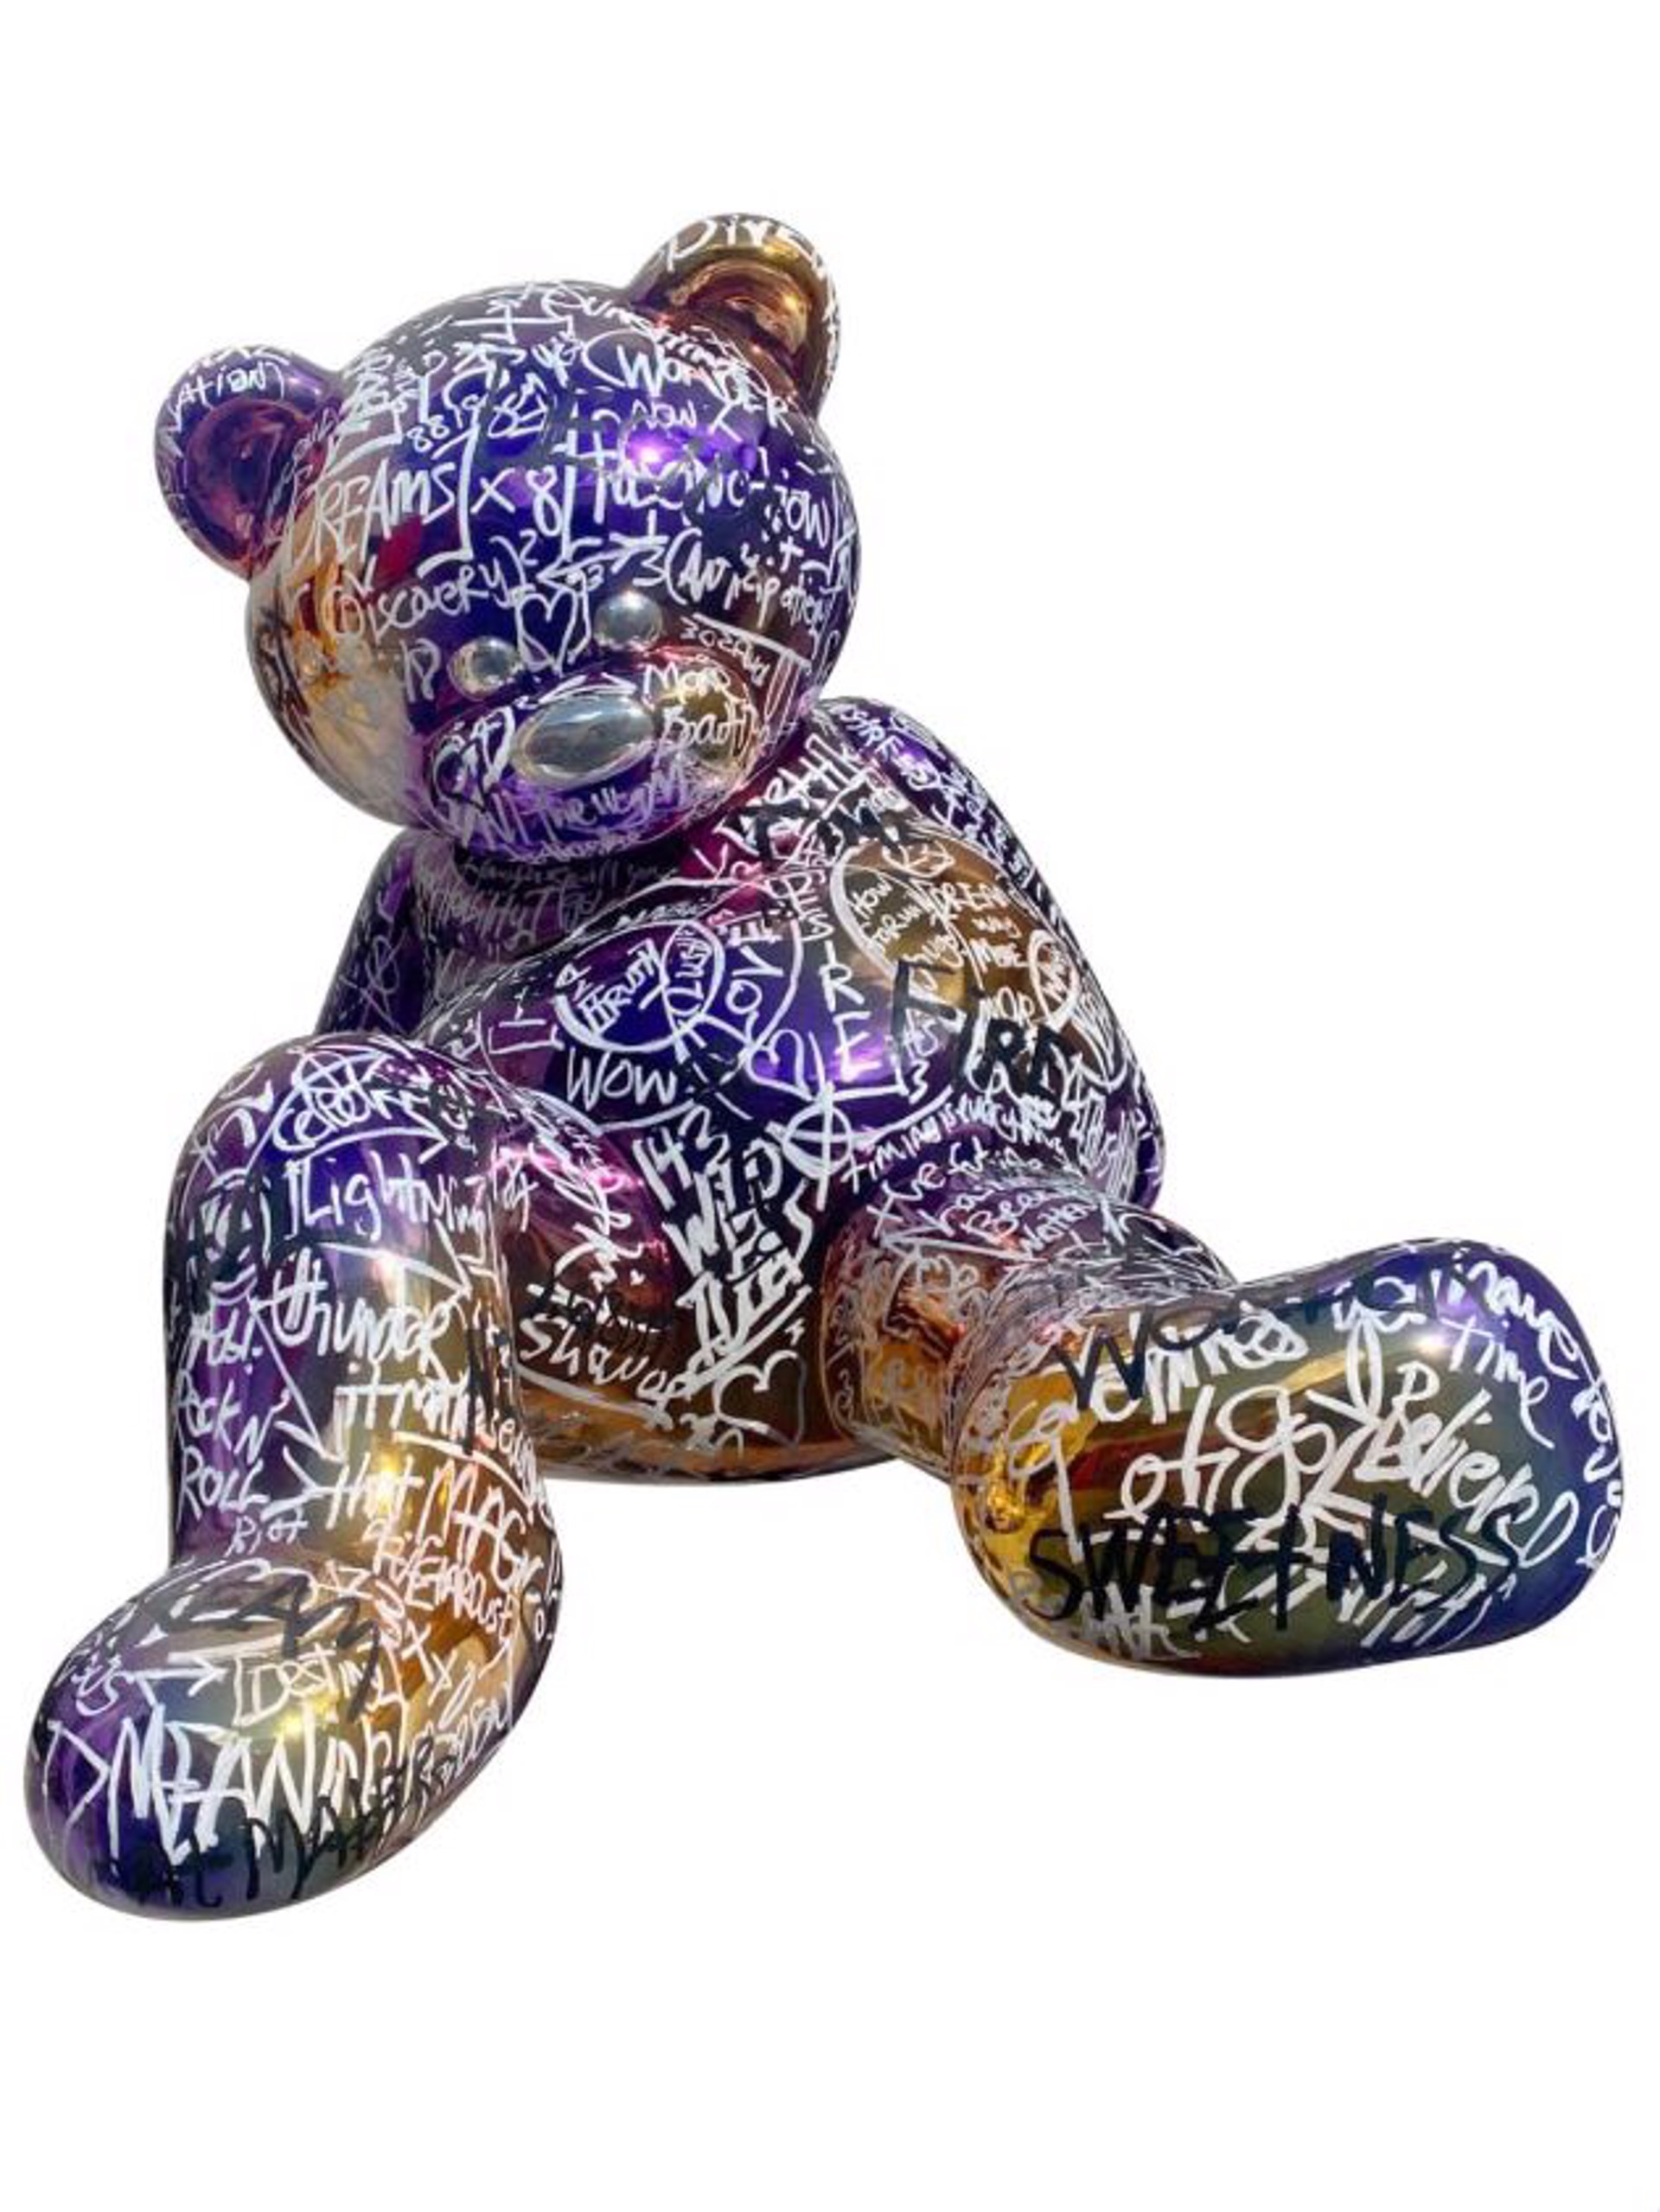 Love Matters | Medium Bear (Purple and Gold) by Brendan Murphy